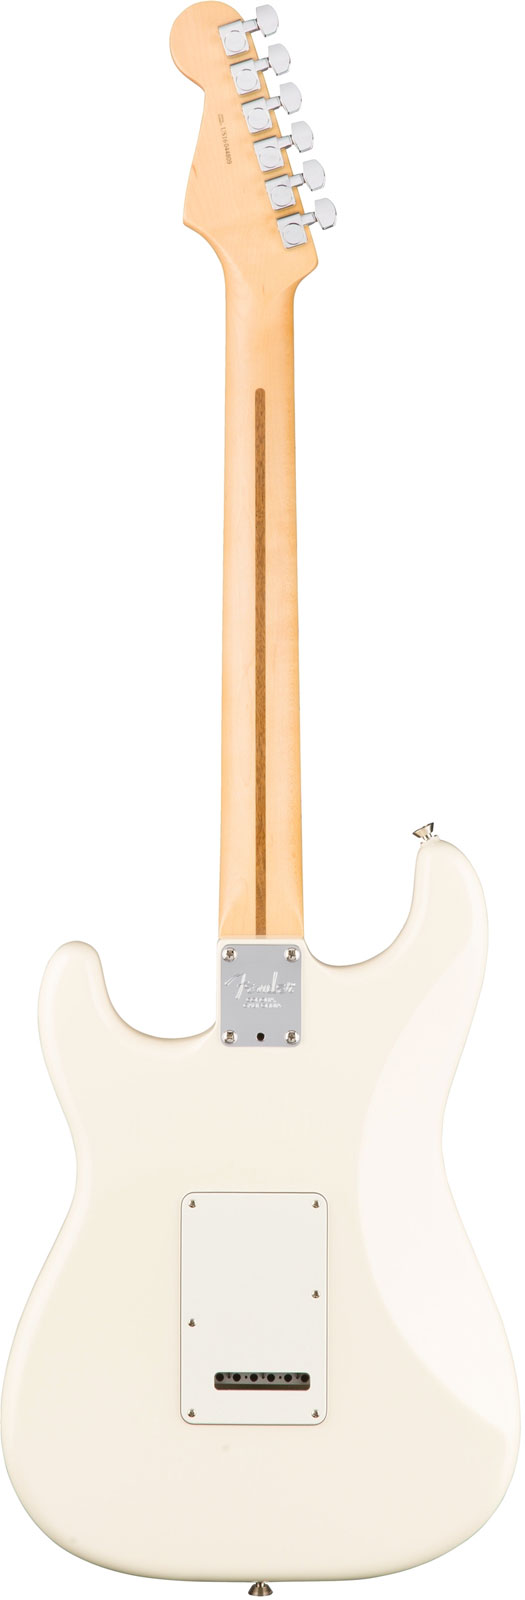 Fender Strat American Professional 2017 3s Usa Mn - Olympic White - Guitarra eléctrica con forma de str. - Variation 2